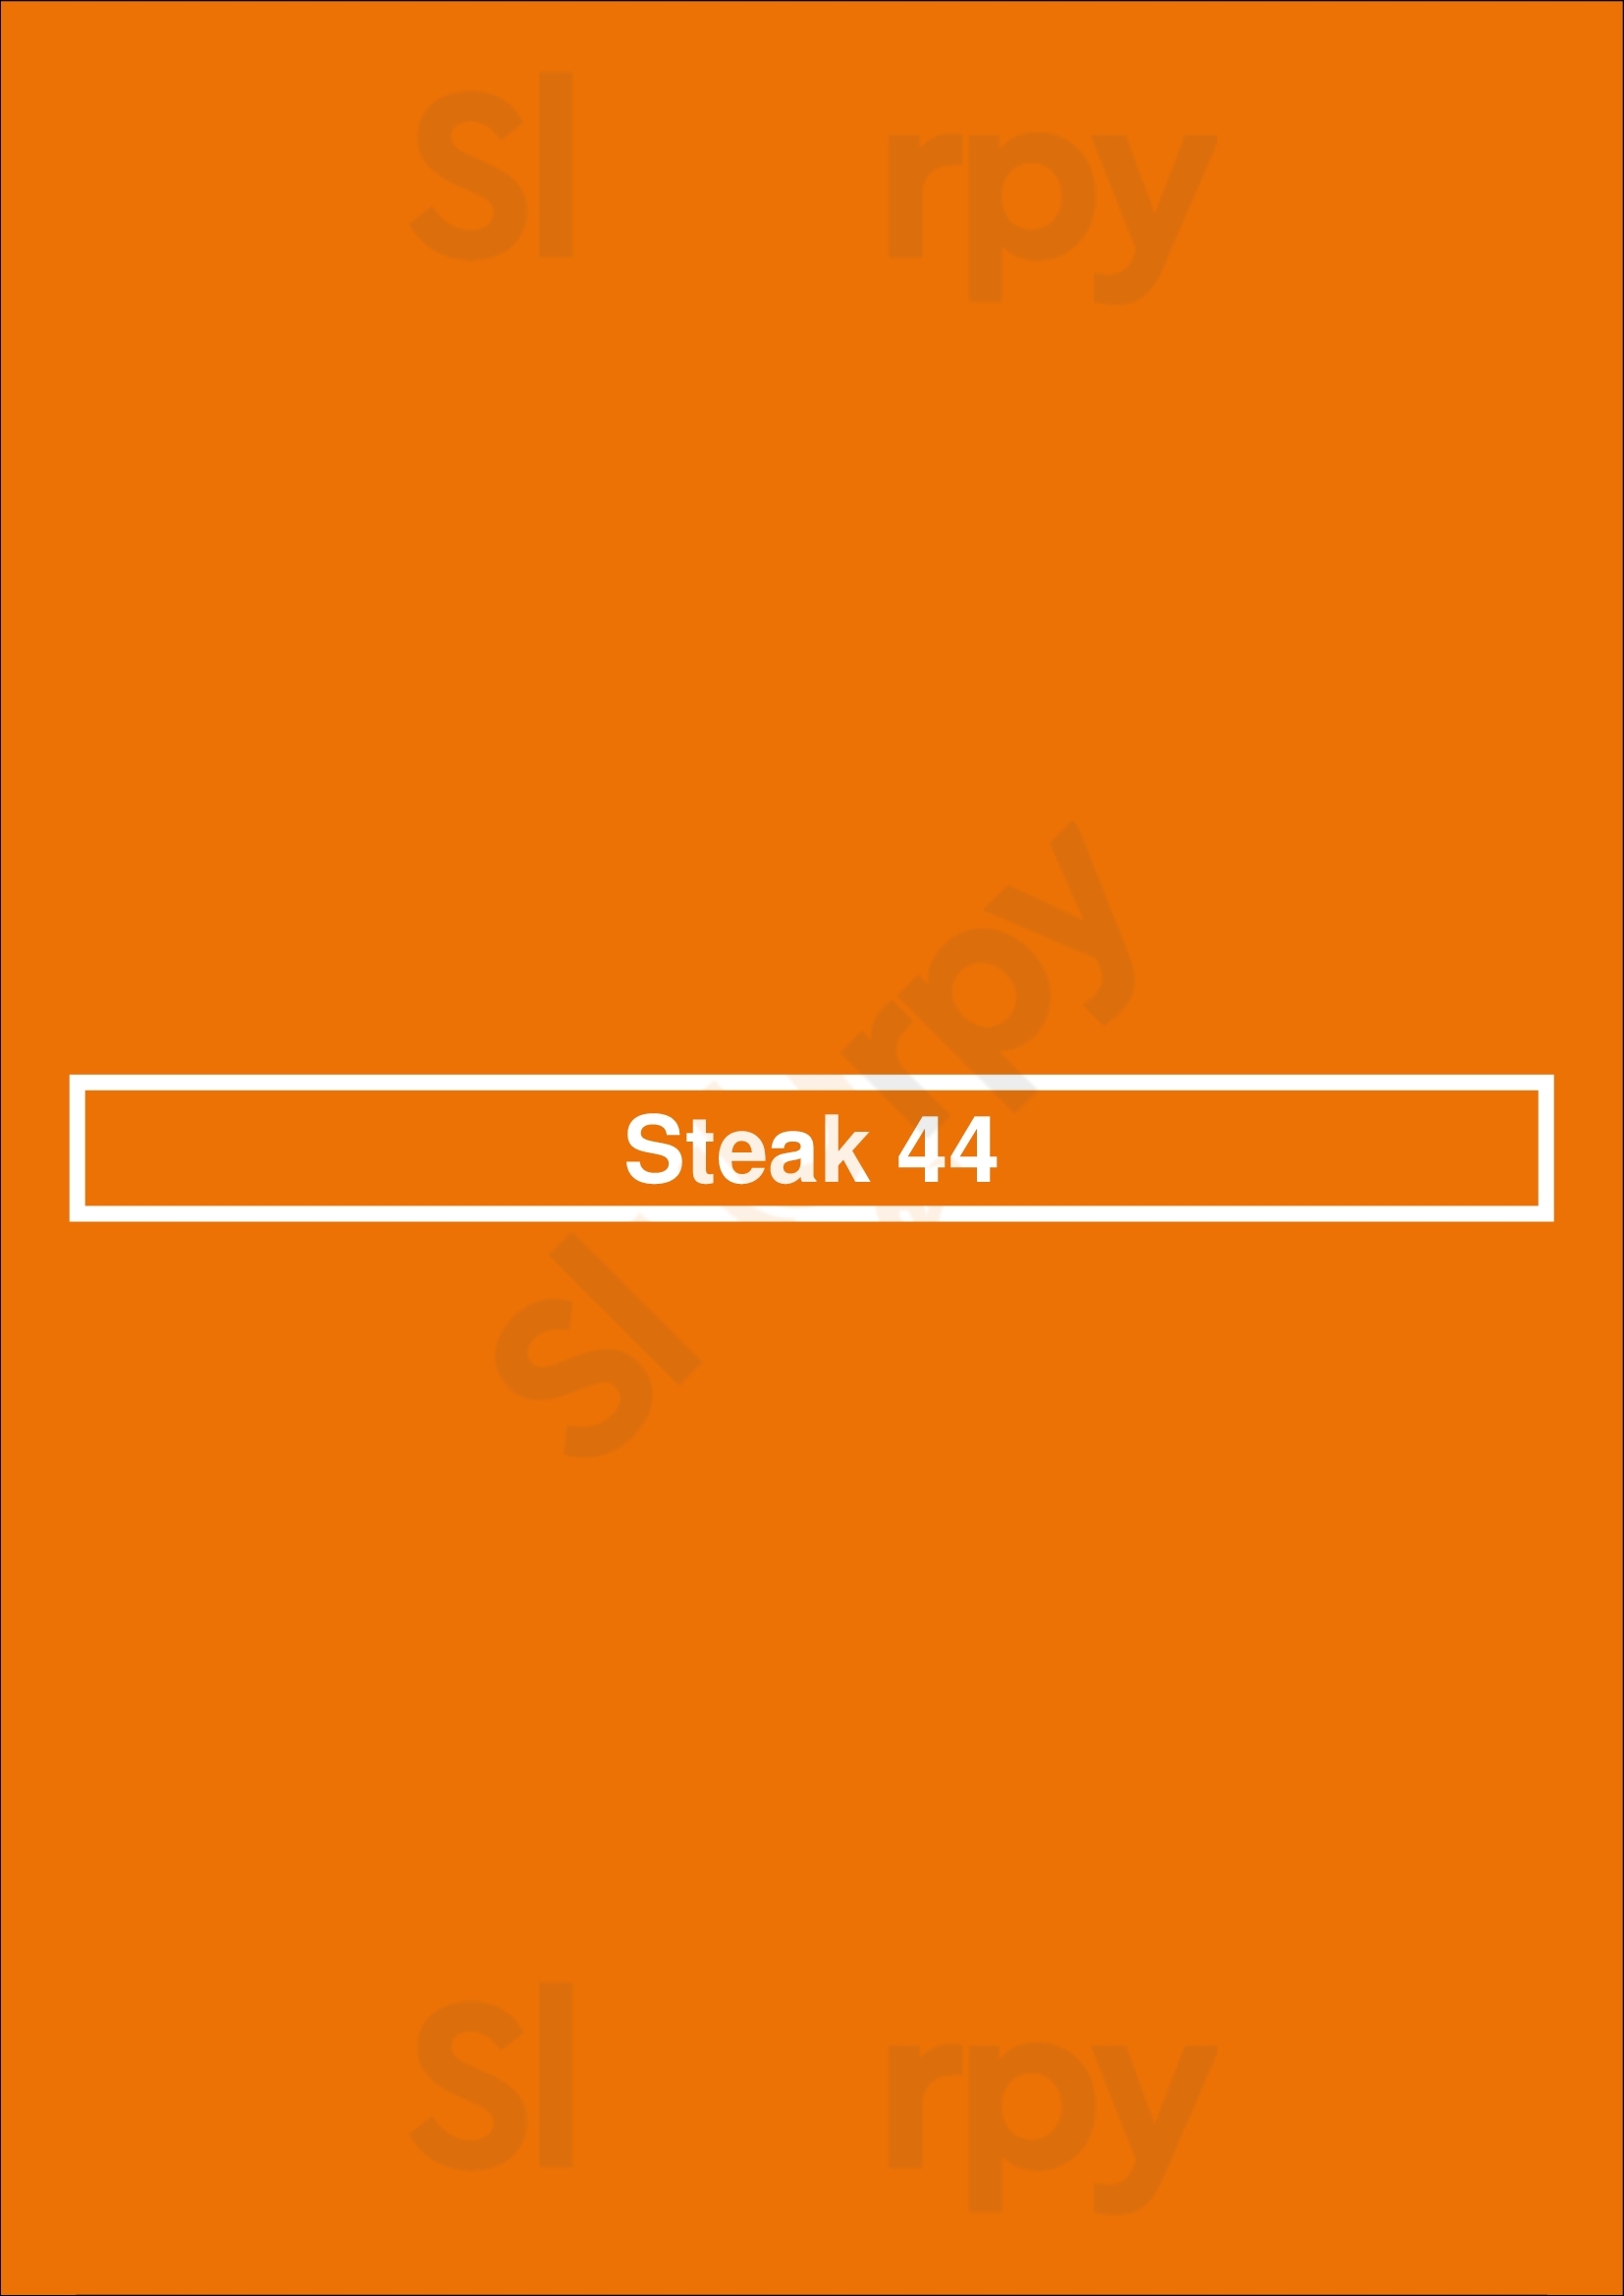 Steak 44 Phoenix Menu - 1